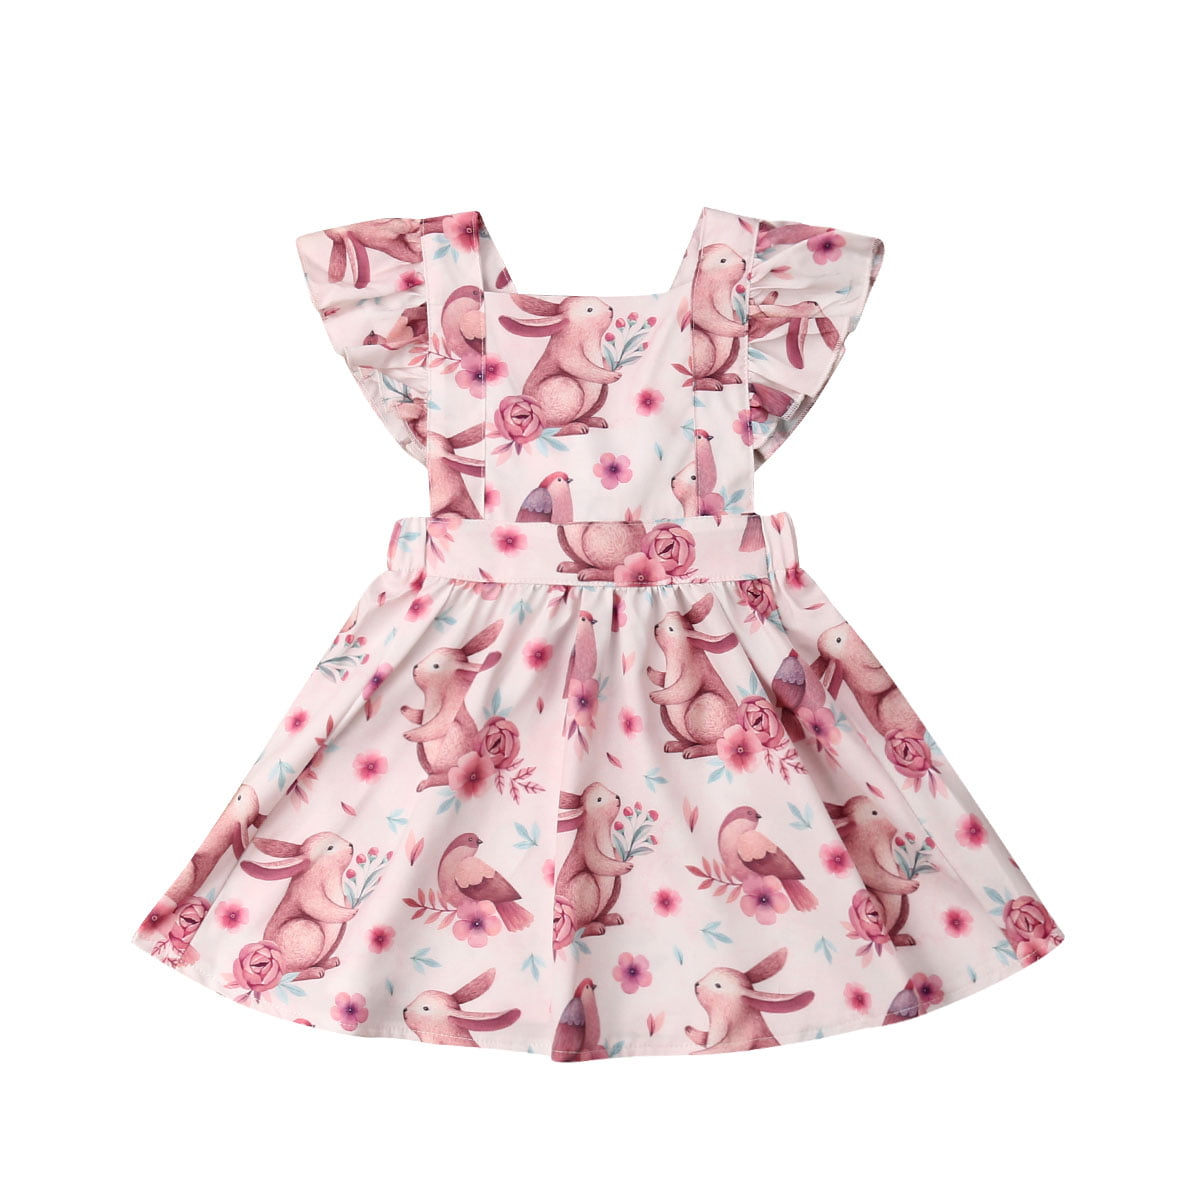 Newborn Toddler Baby Girl Dresses One Piece Summer Sleeveless Floral Ruffle Dress Skirts Outifts 